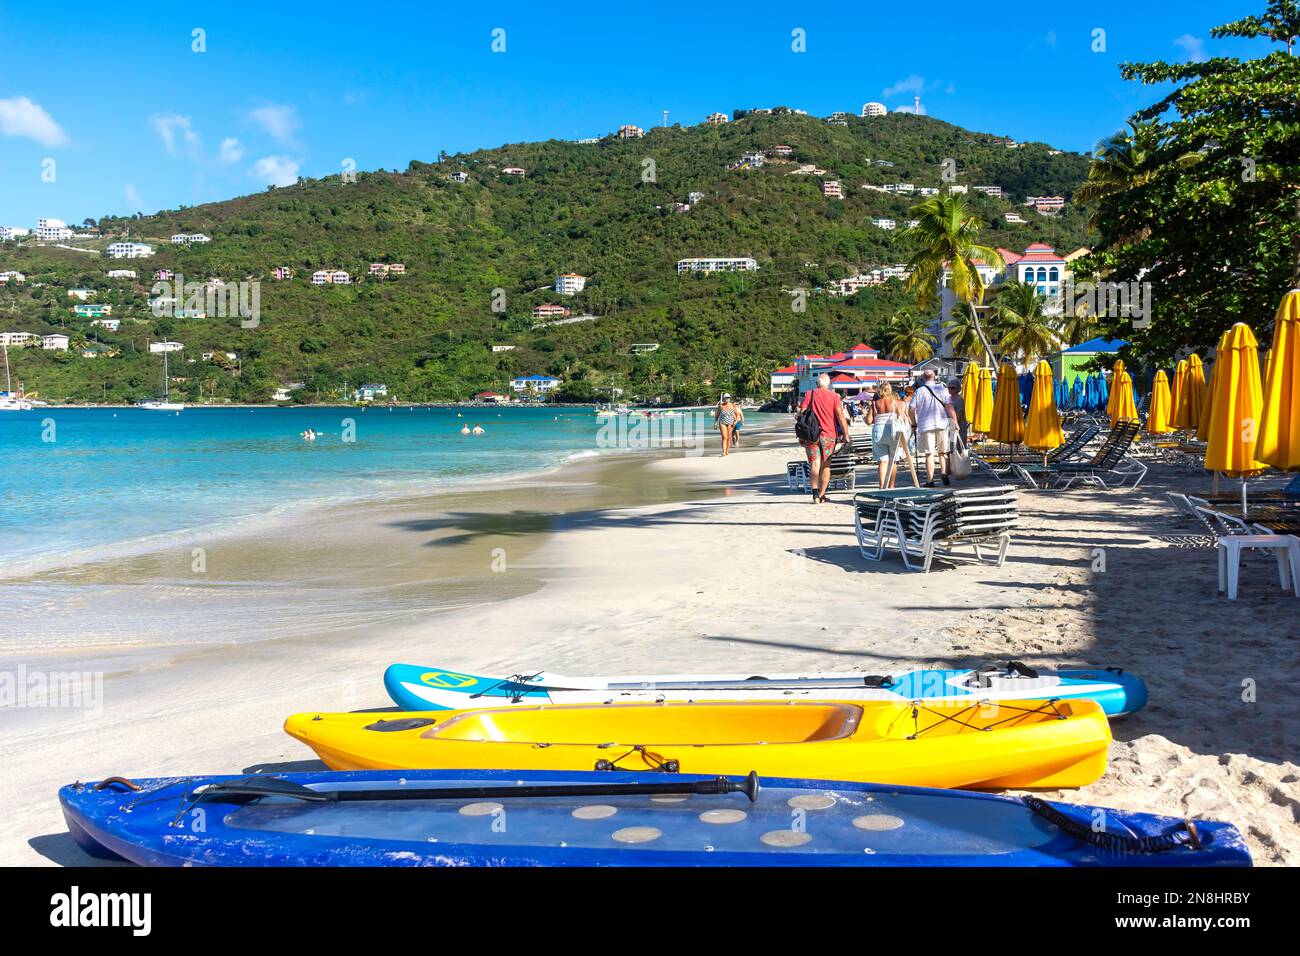 Beach resort view, Cane Garden Bay, Tortola, The British Virgin Islands (BVI), Lesser Antilles, Caribbean Stock Photo